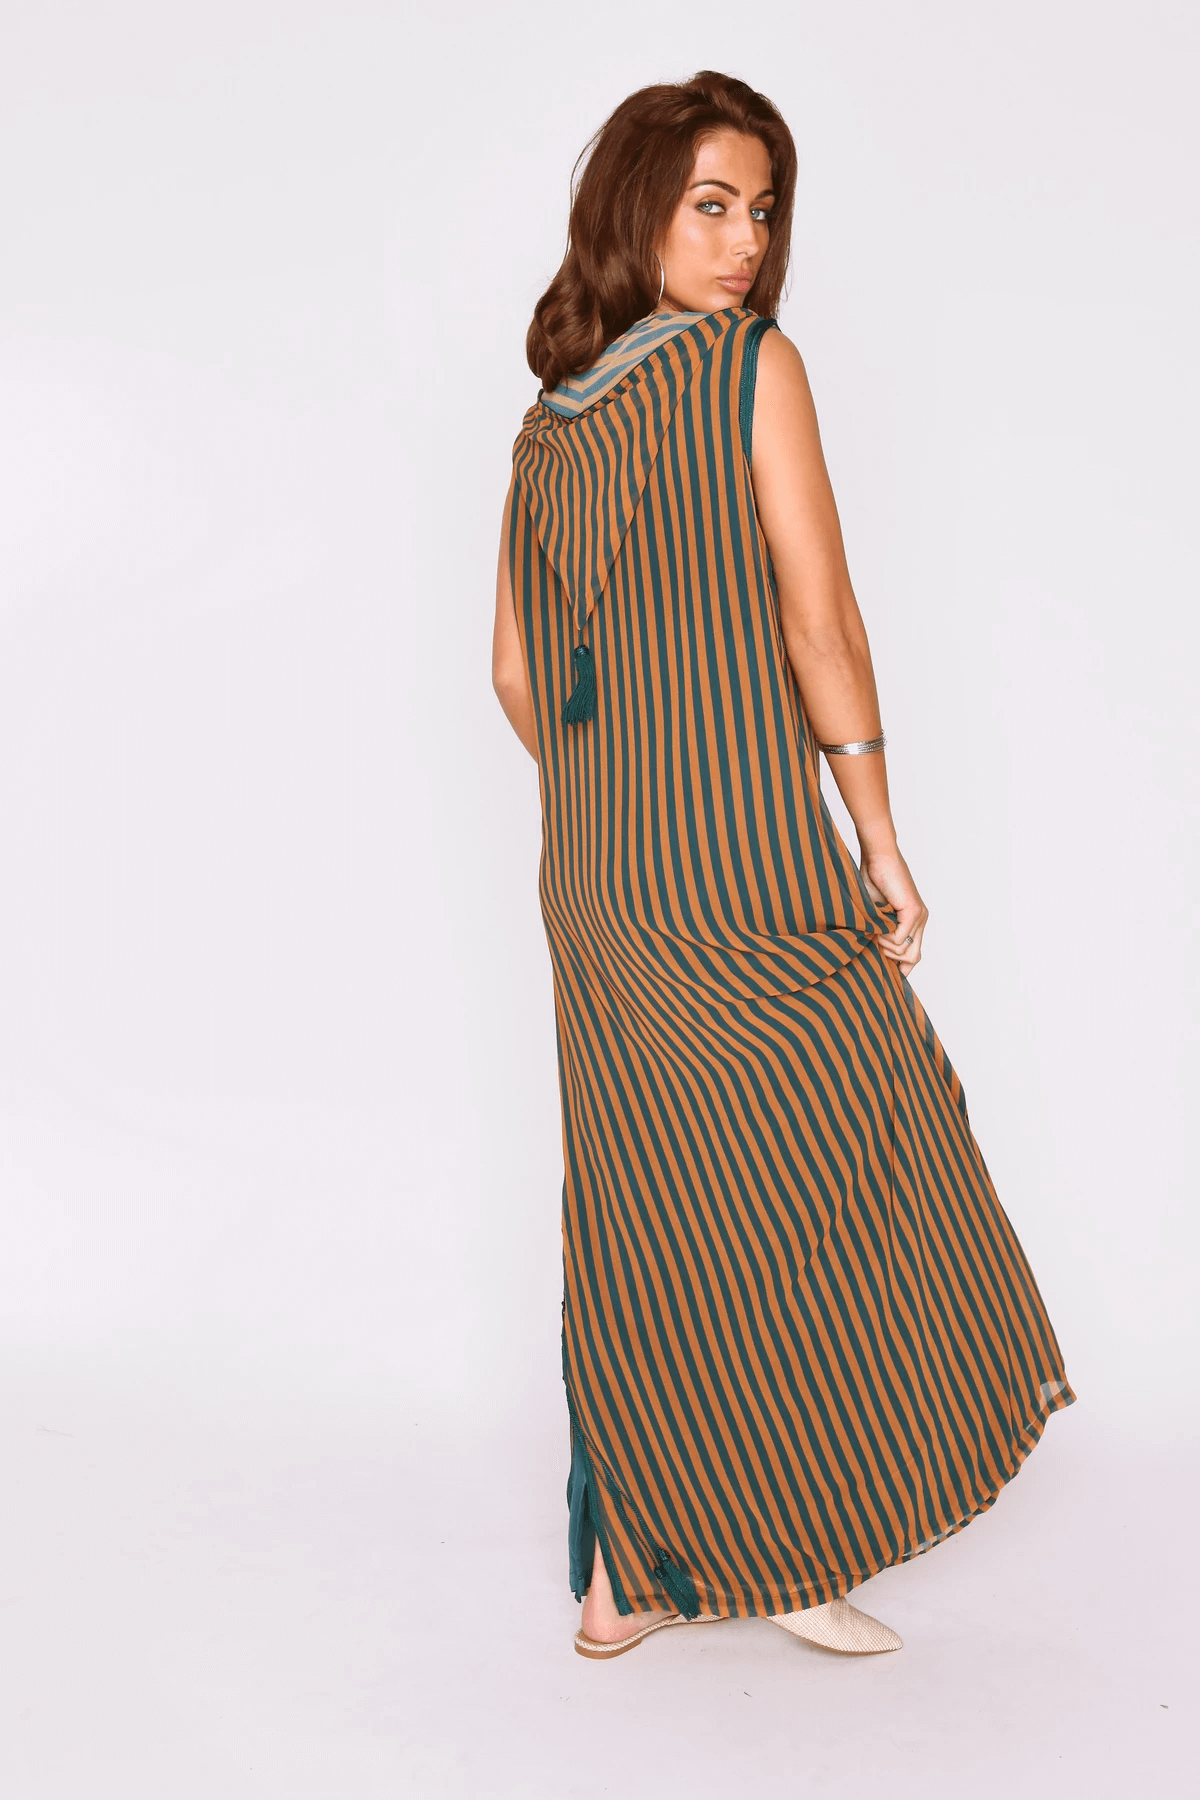 Djellaba Roxane Sleeveless Side Slits Hooded Maxi Dress in Green and Orange Stripes